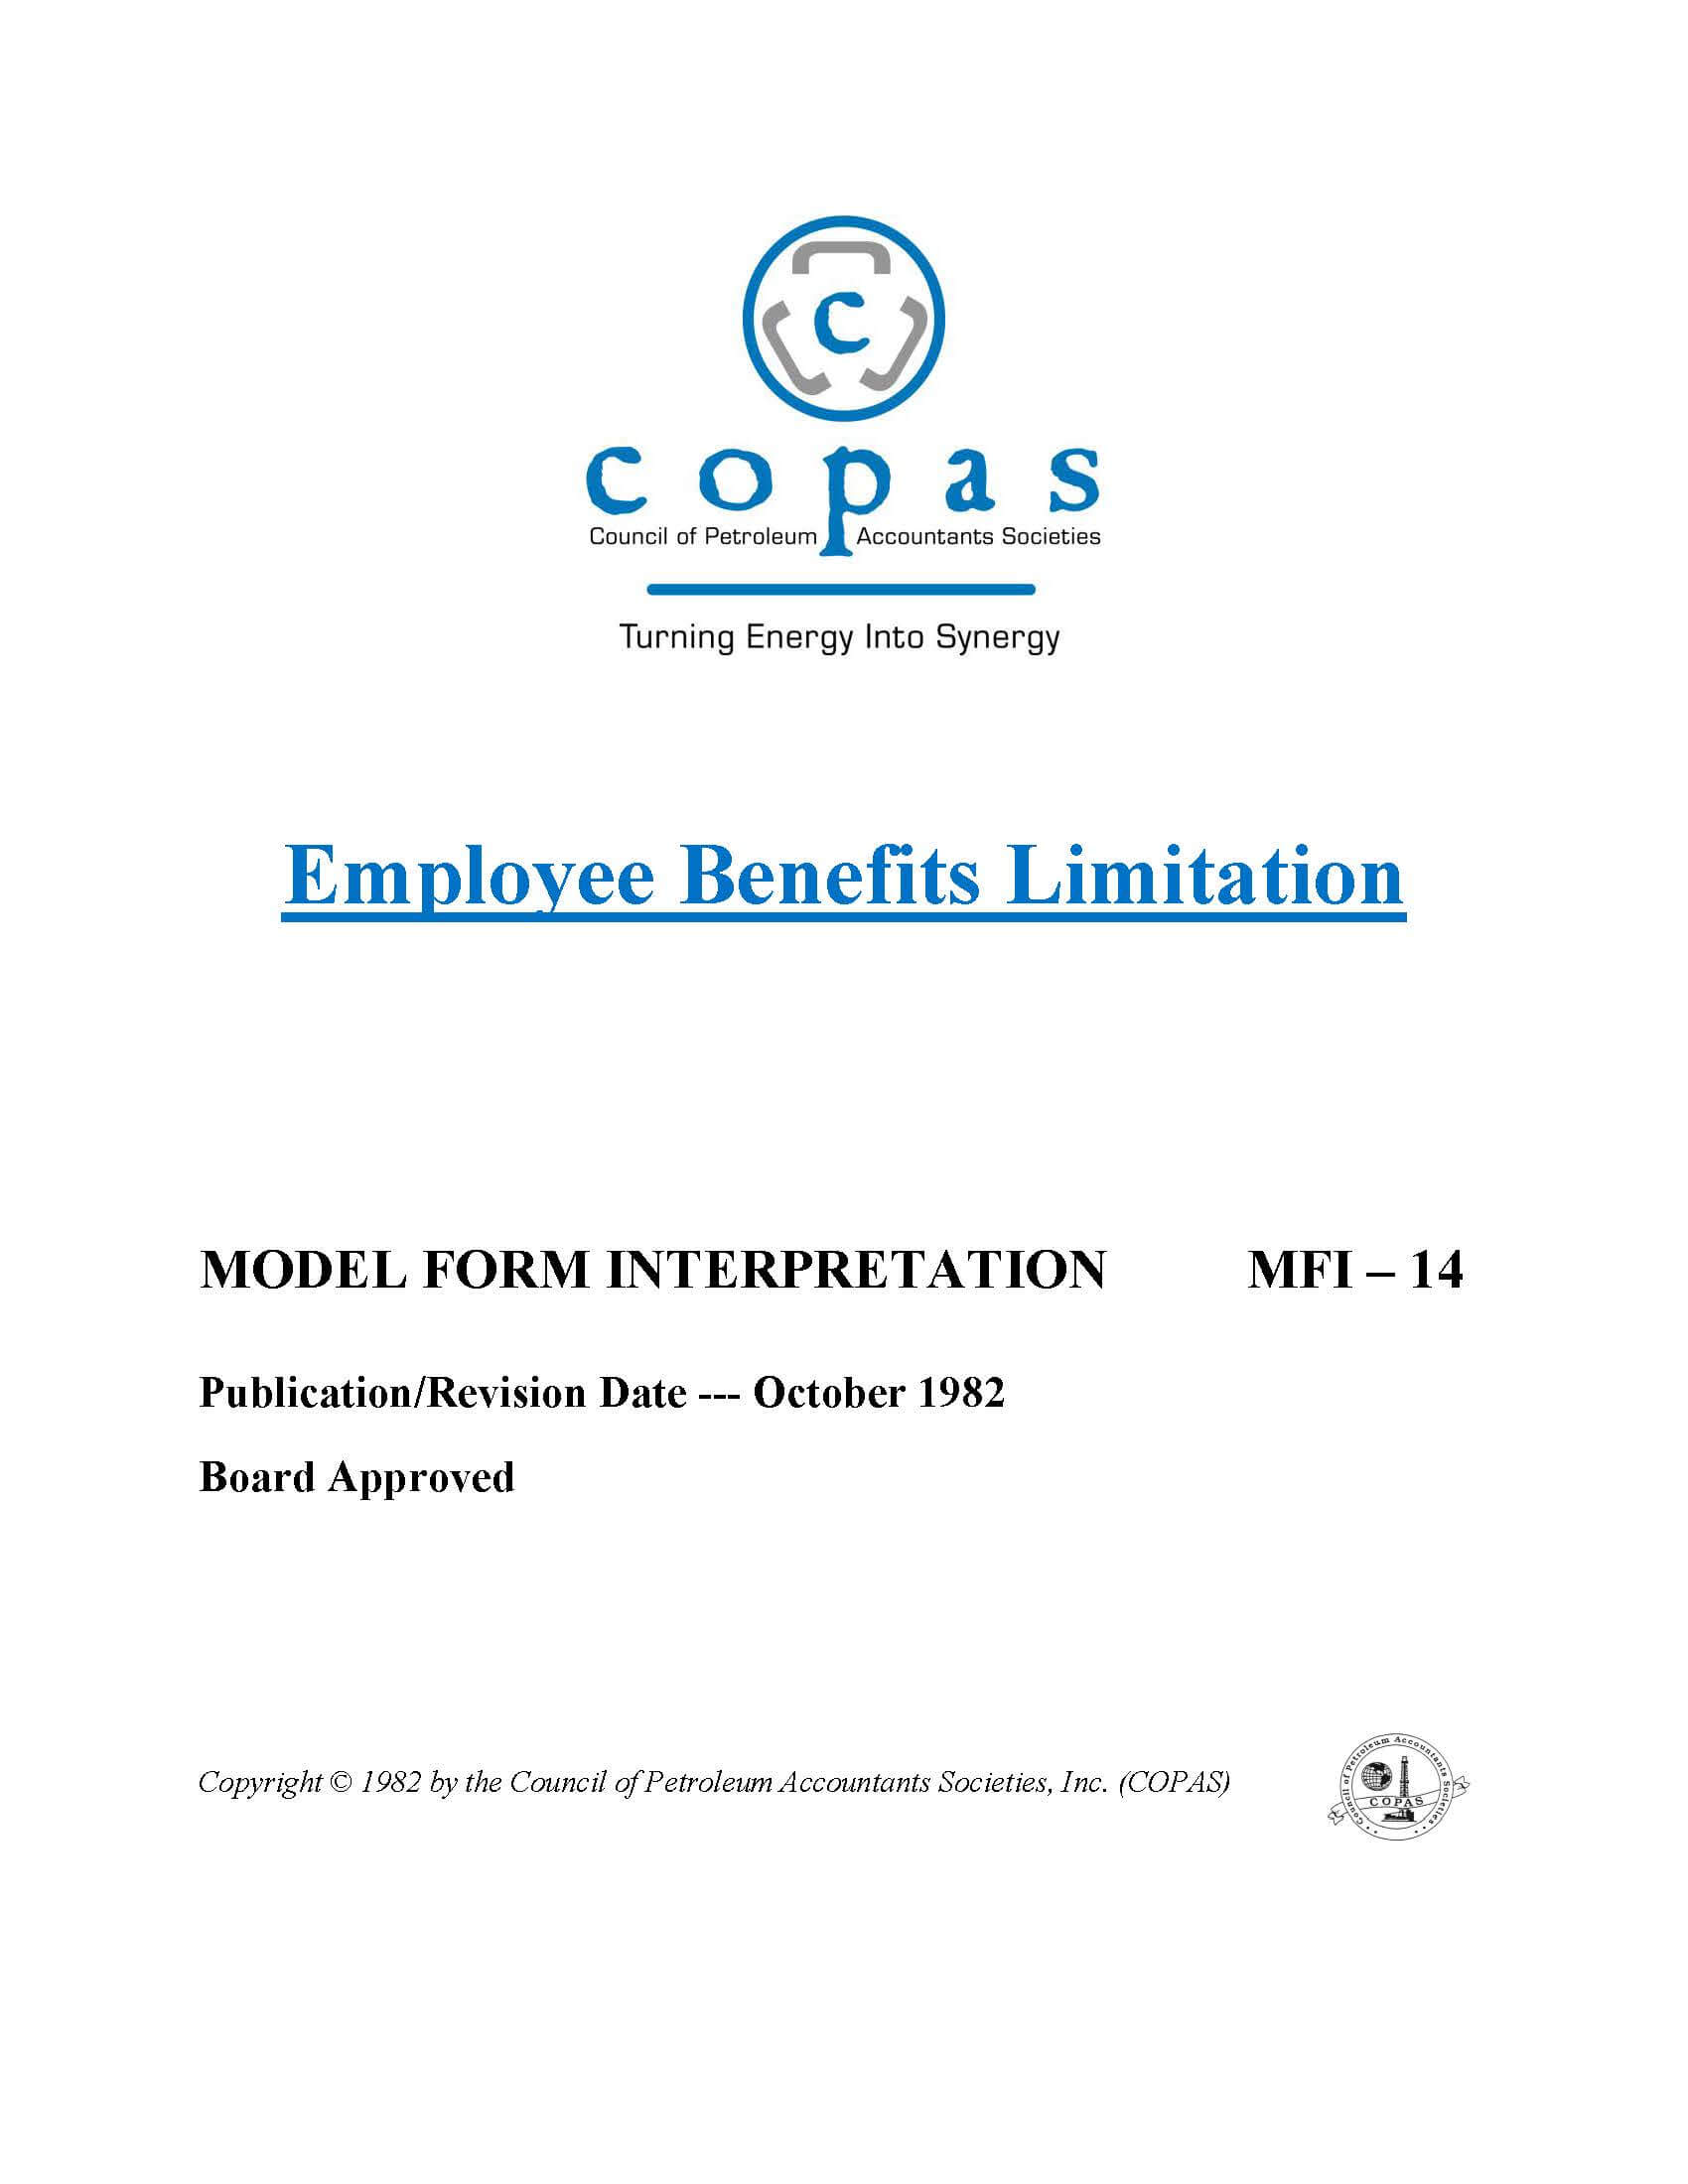 MFI-14 Employee Benefits Limitation - products MFI 14 Employee Benefits Limitation - Council of Petroleum Accountants Societies